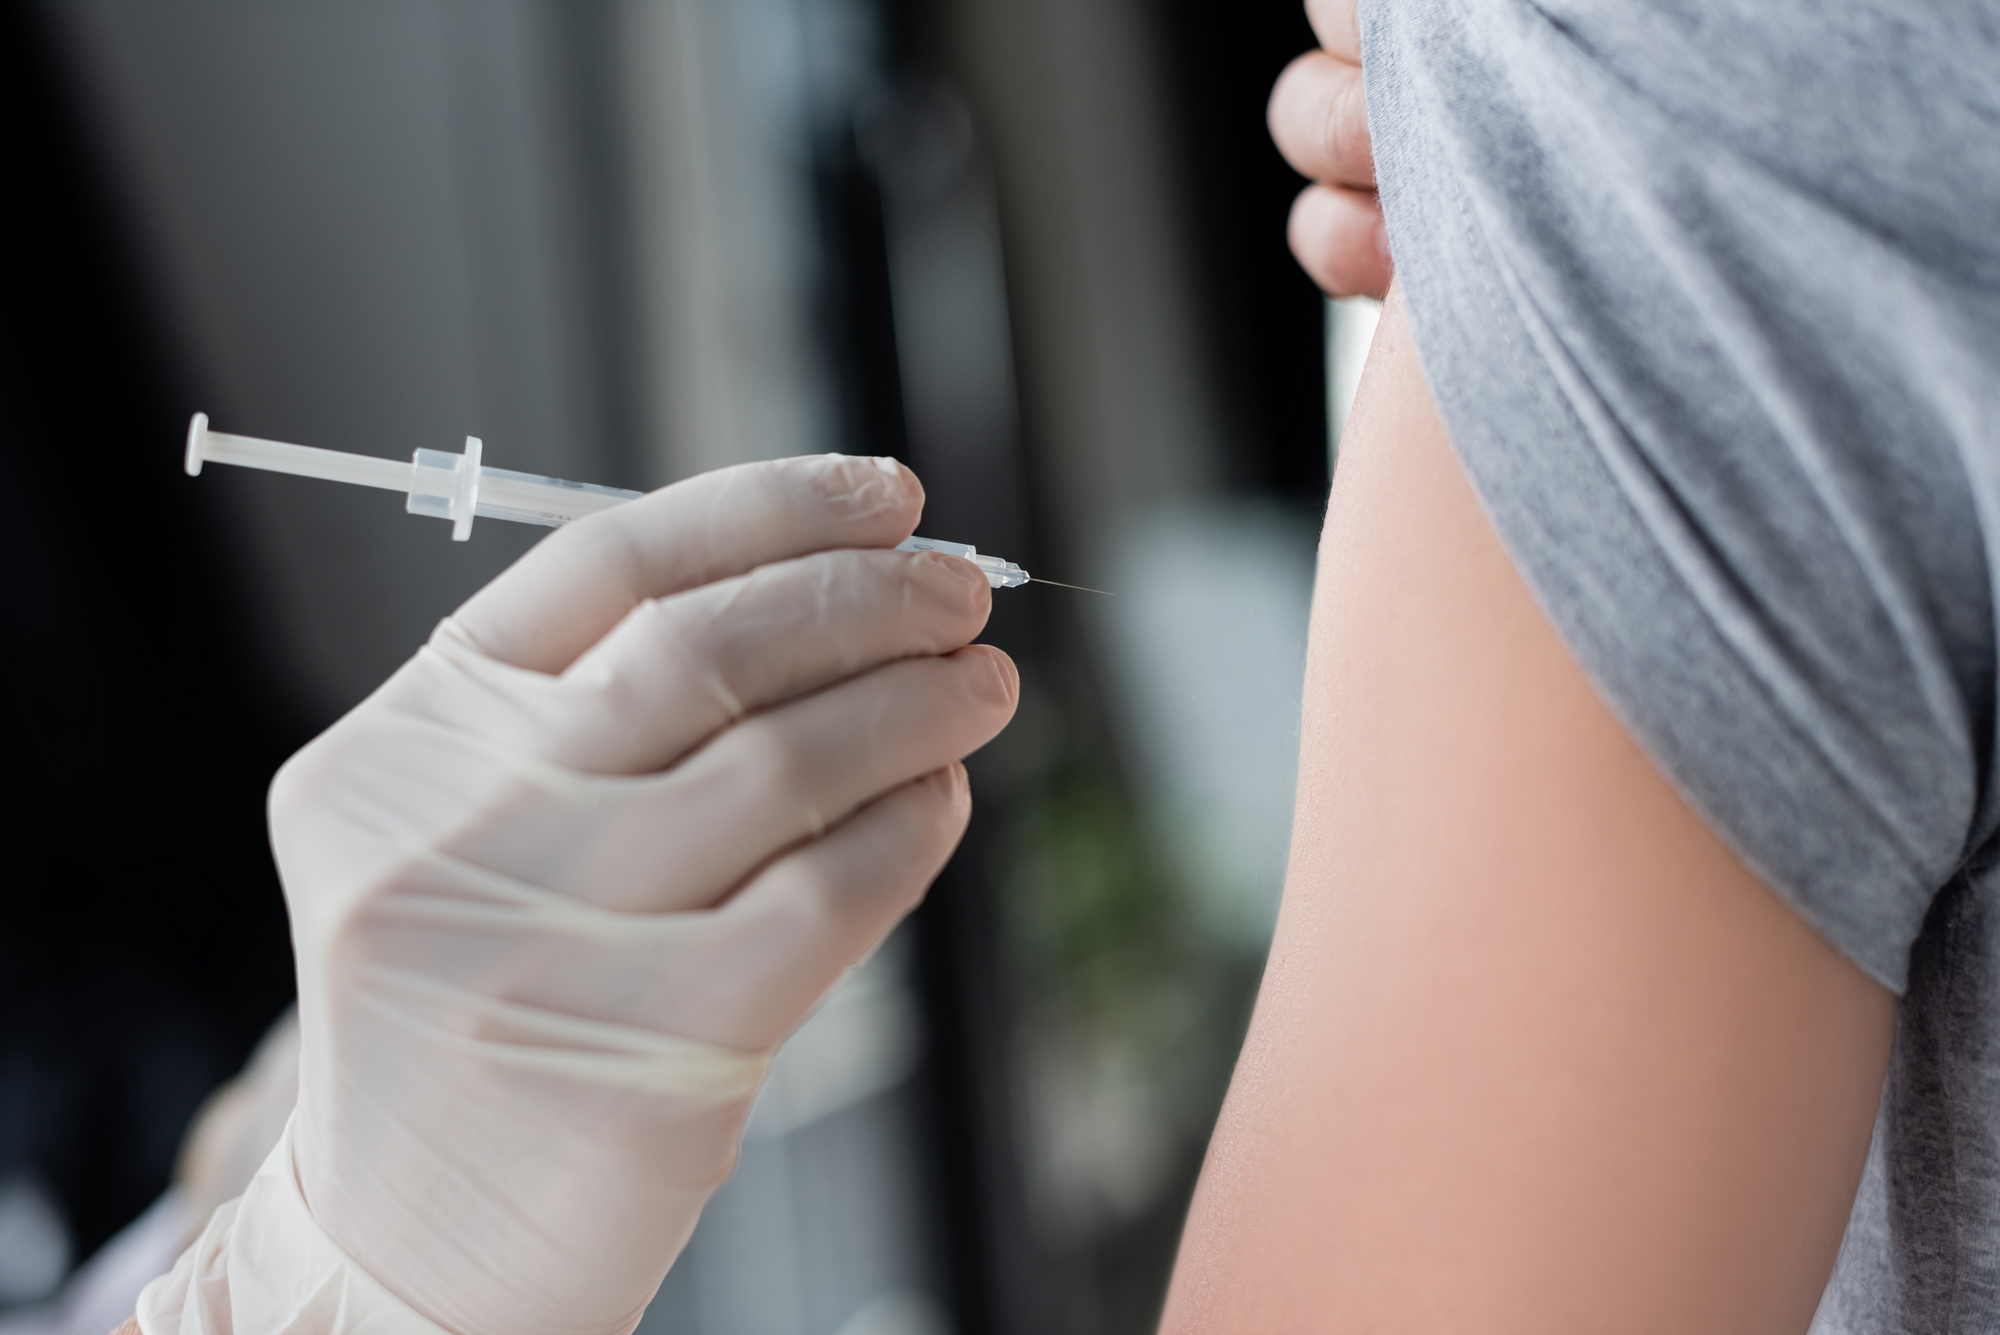 Обязательная вакцинация COVID-19: кого и какими темпами прививают в Запорожье